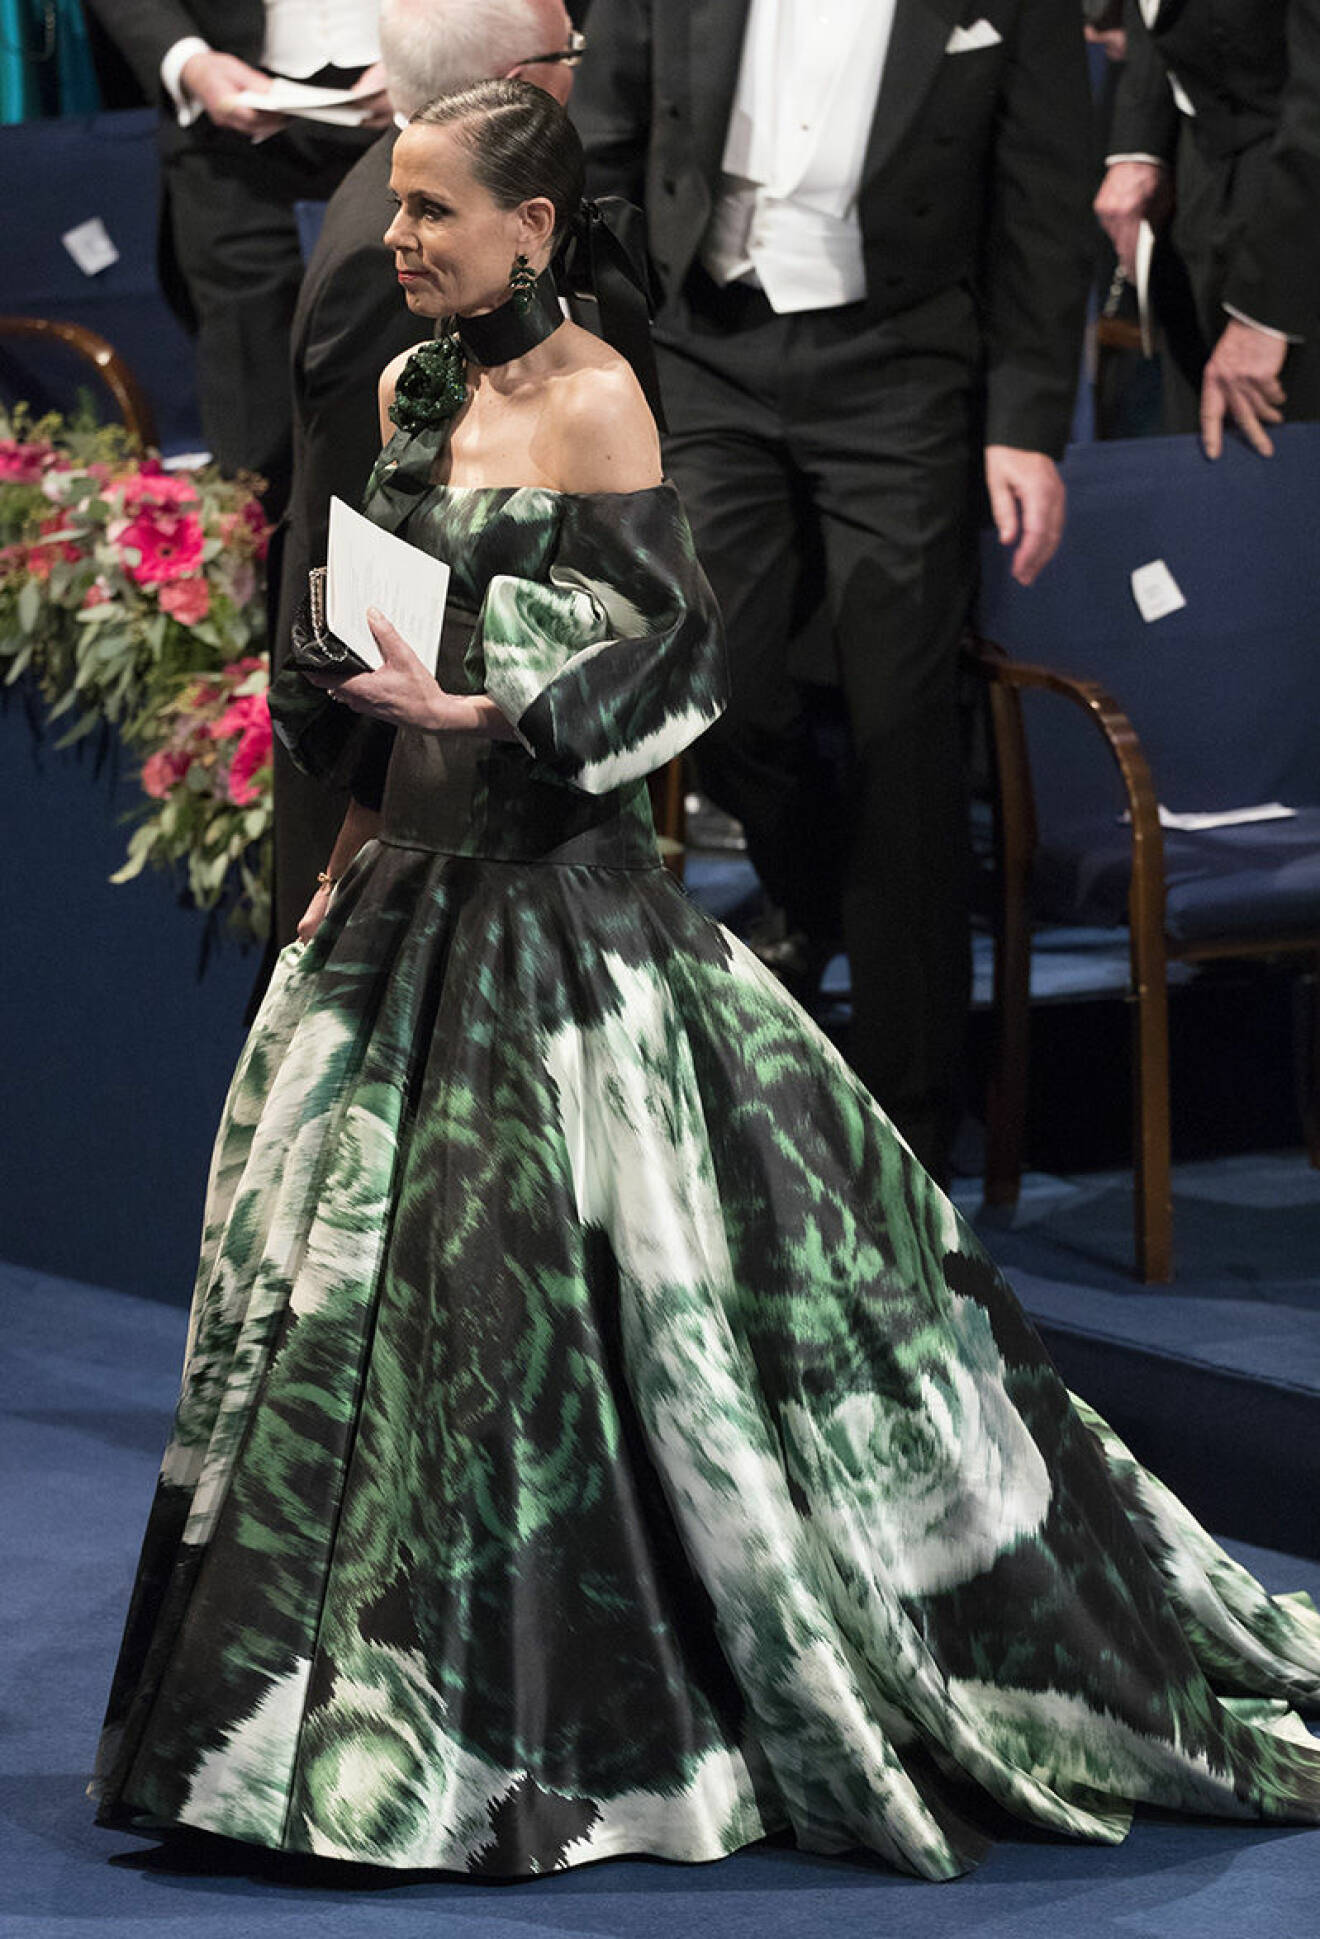 Sara Danius Nobel Prize, Stockholm Concert Hall, 2016-12-10 (c) Charles Hammarsten / IBL Utdelningen av 2015 Ârs Nobelpris, Konserthuset, Stockholm, 2016-12-10